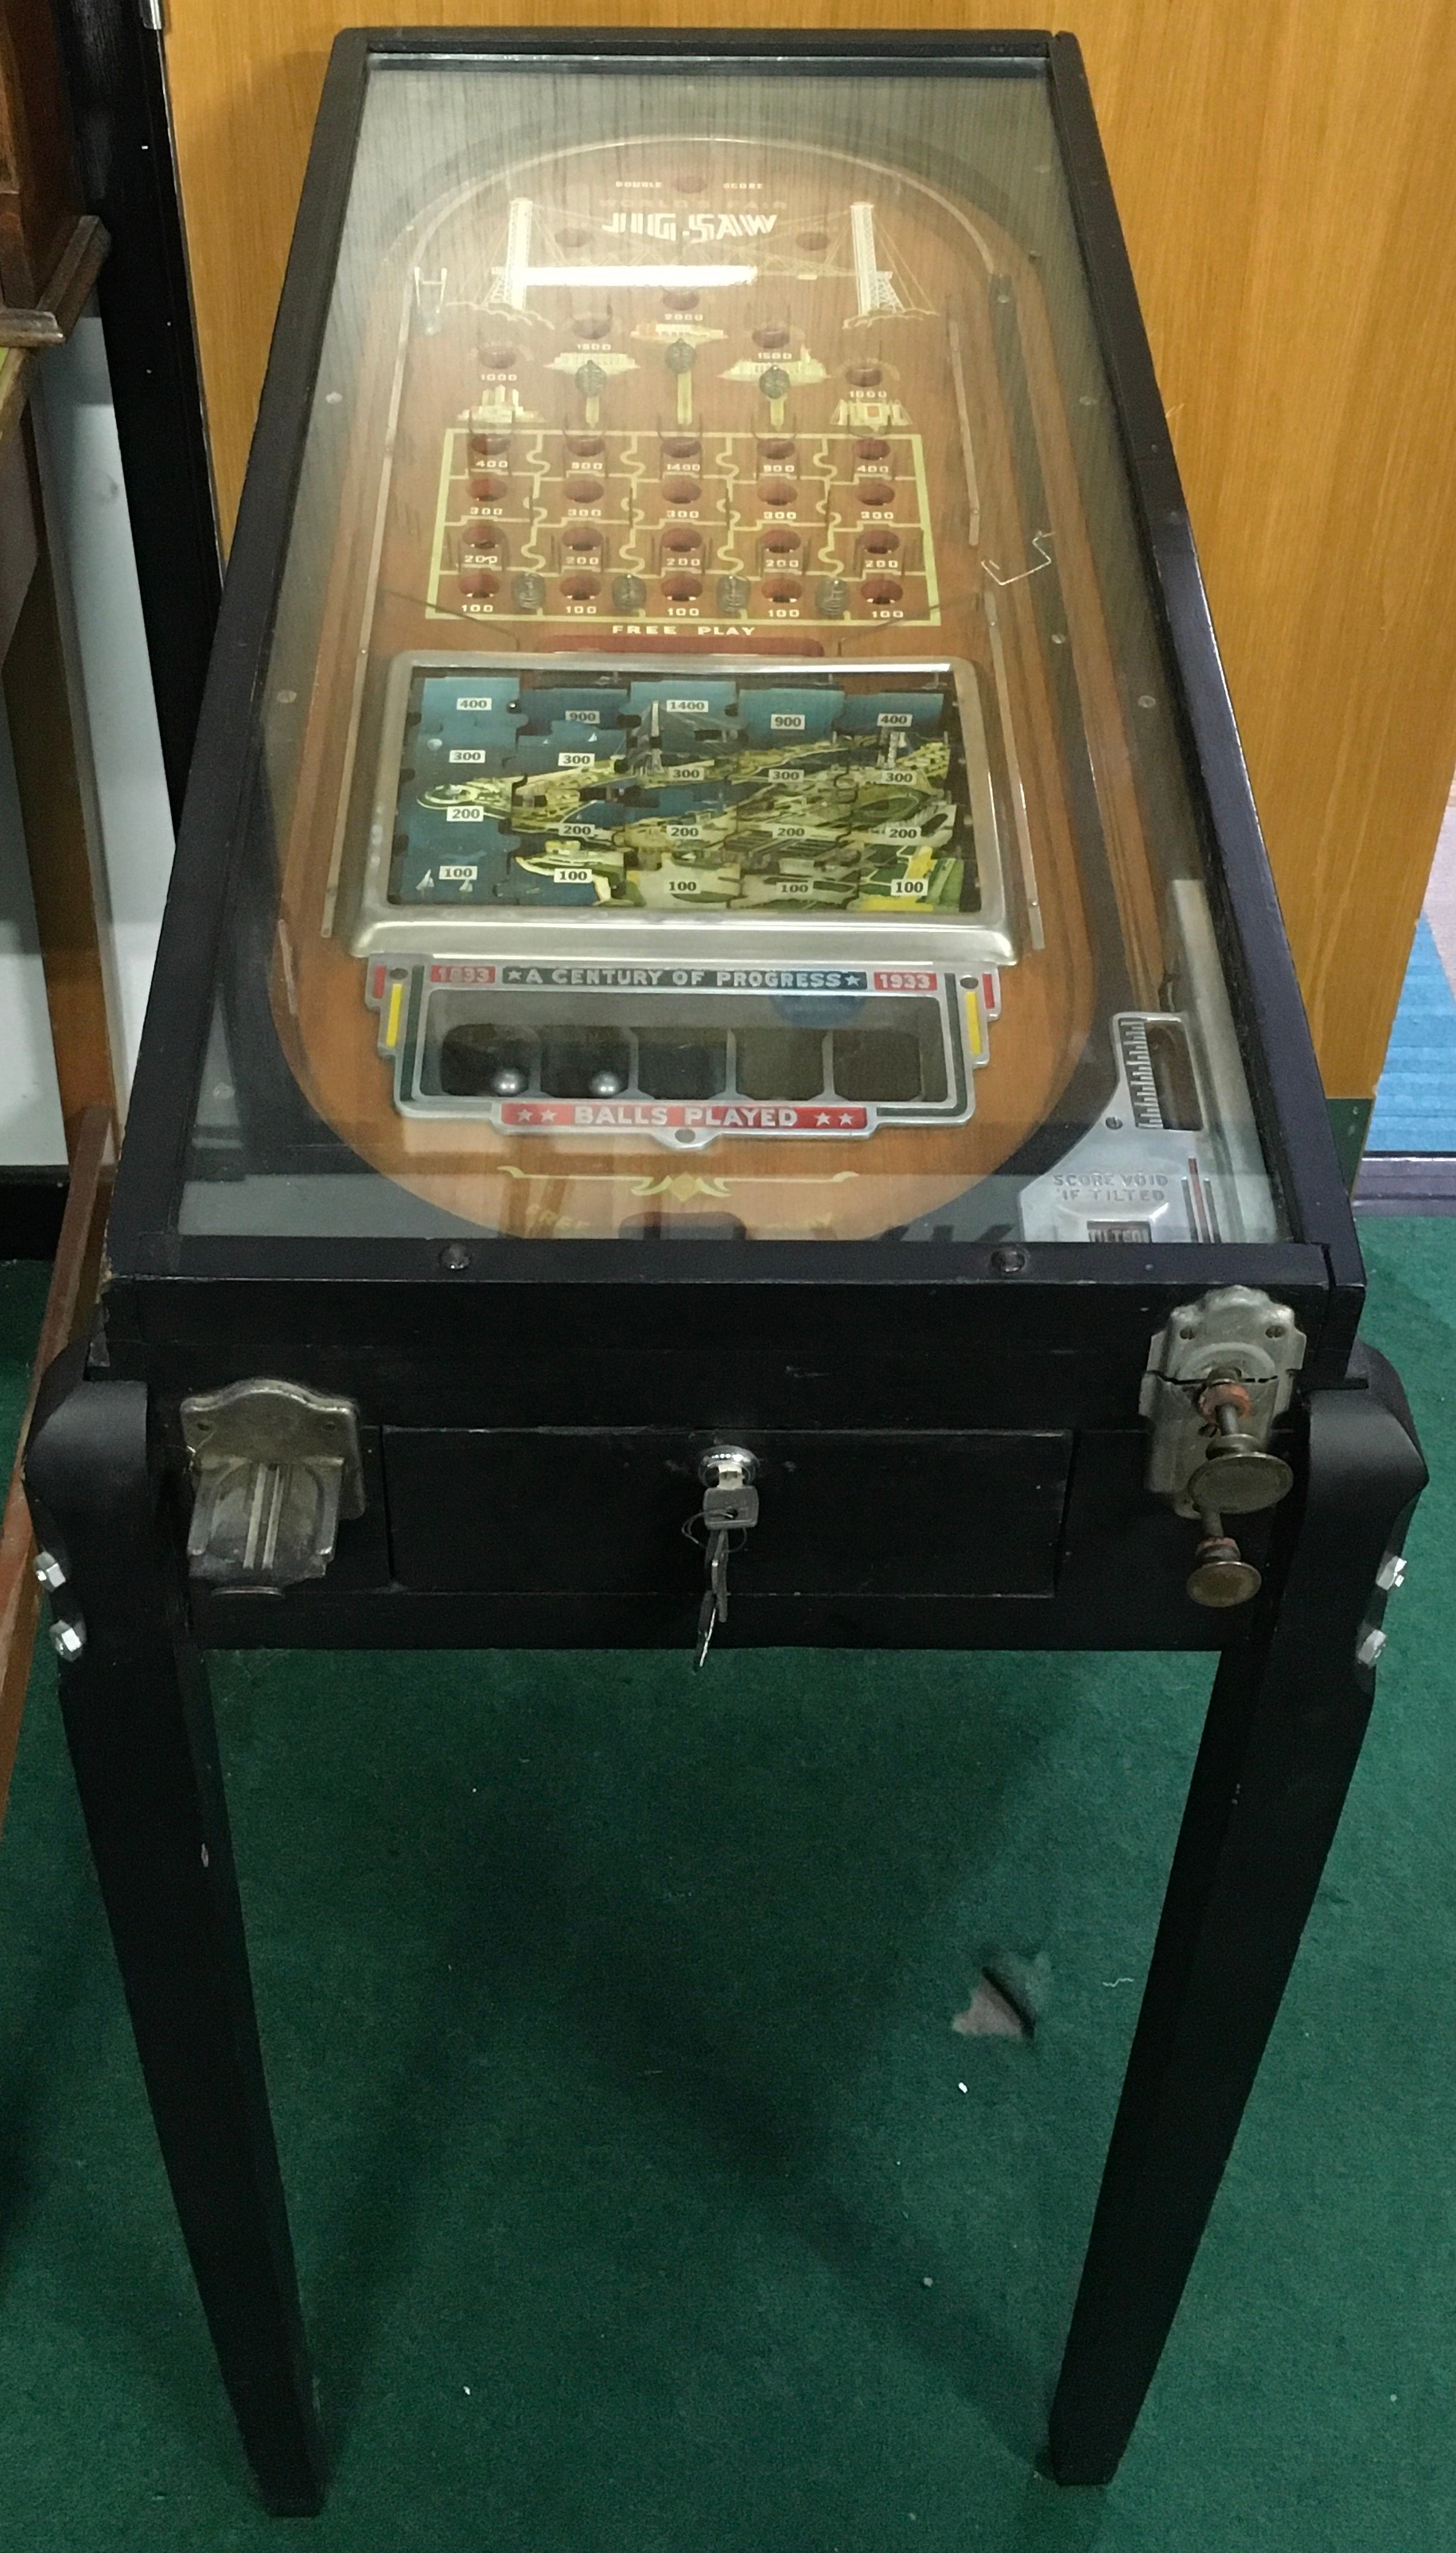 Jig Saw pinball machine works on 1d coin.